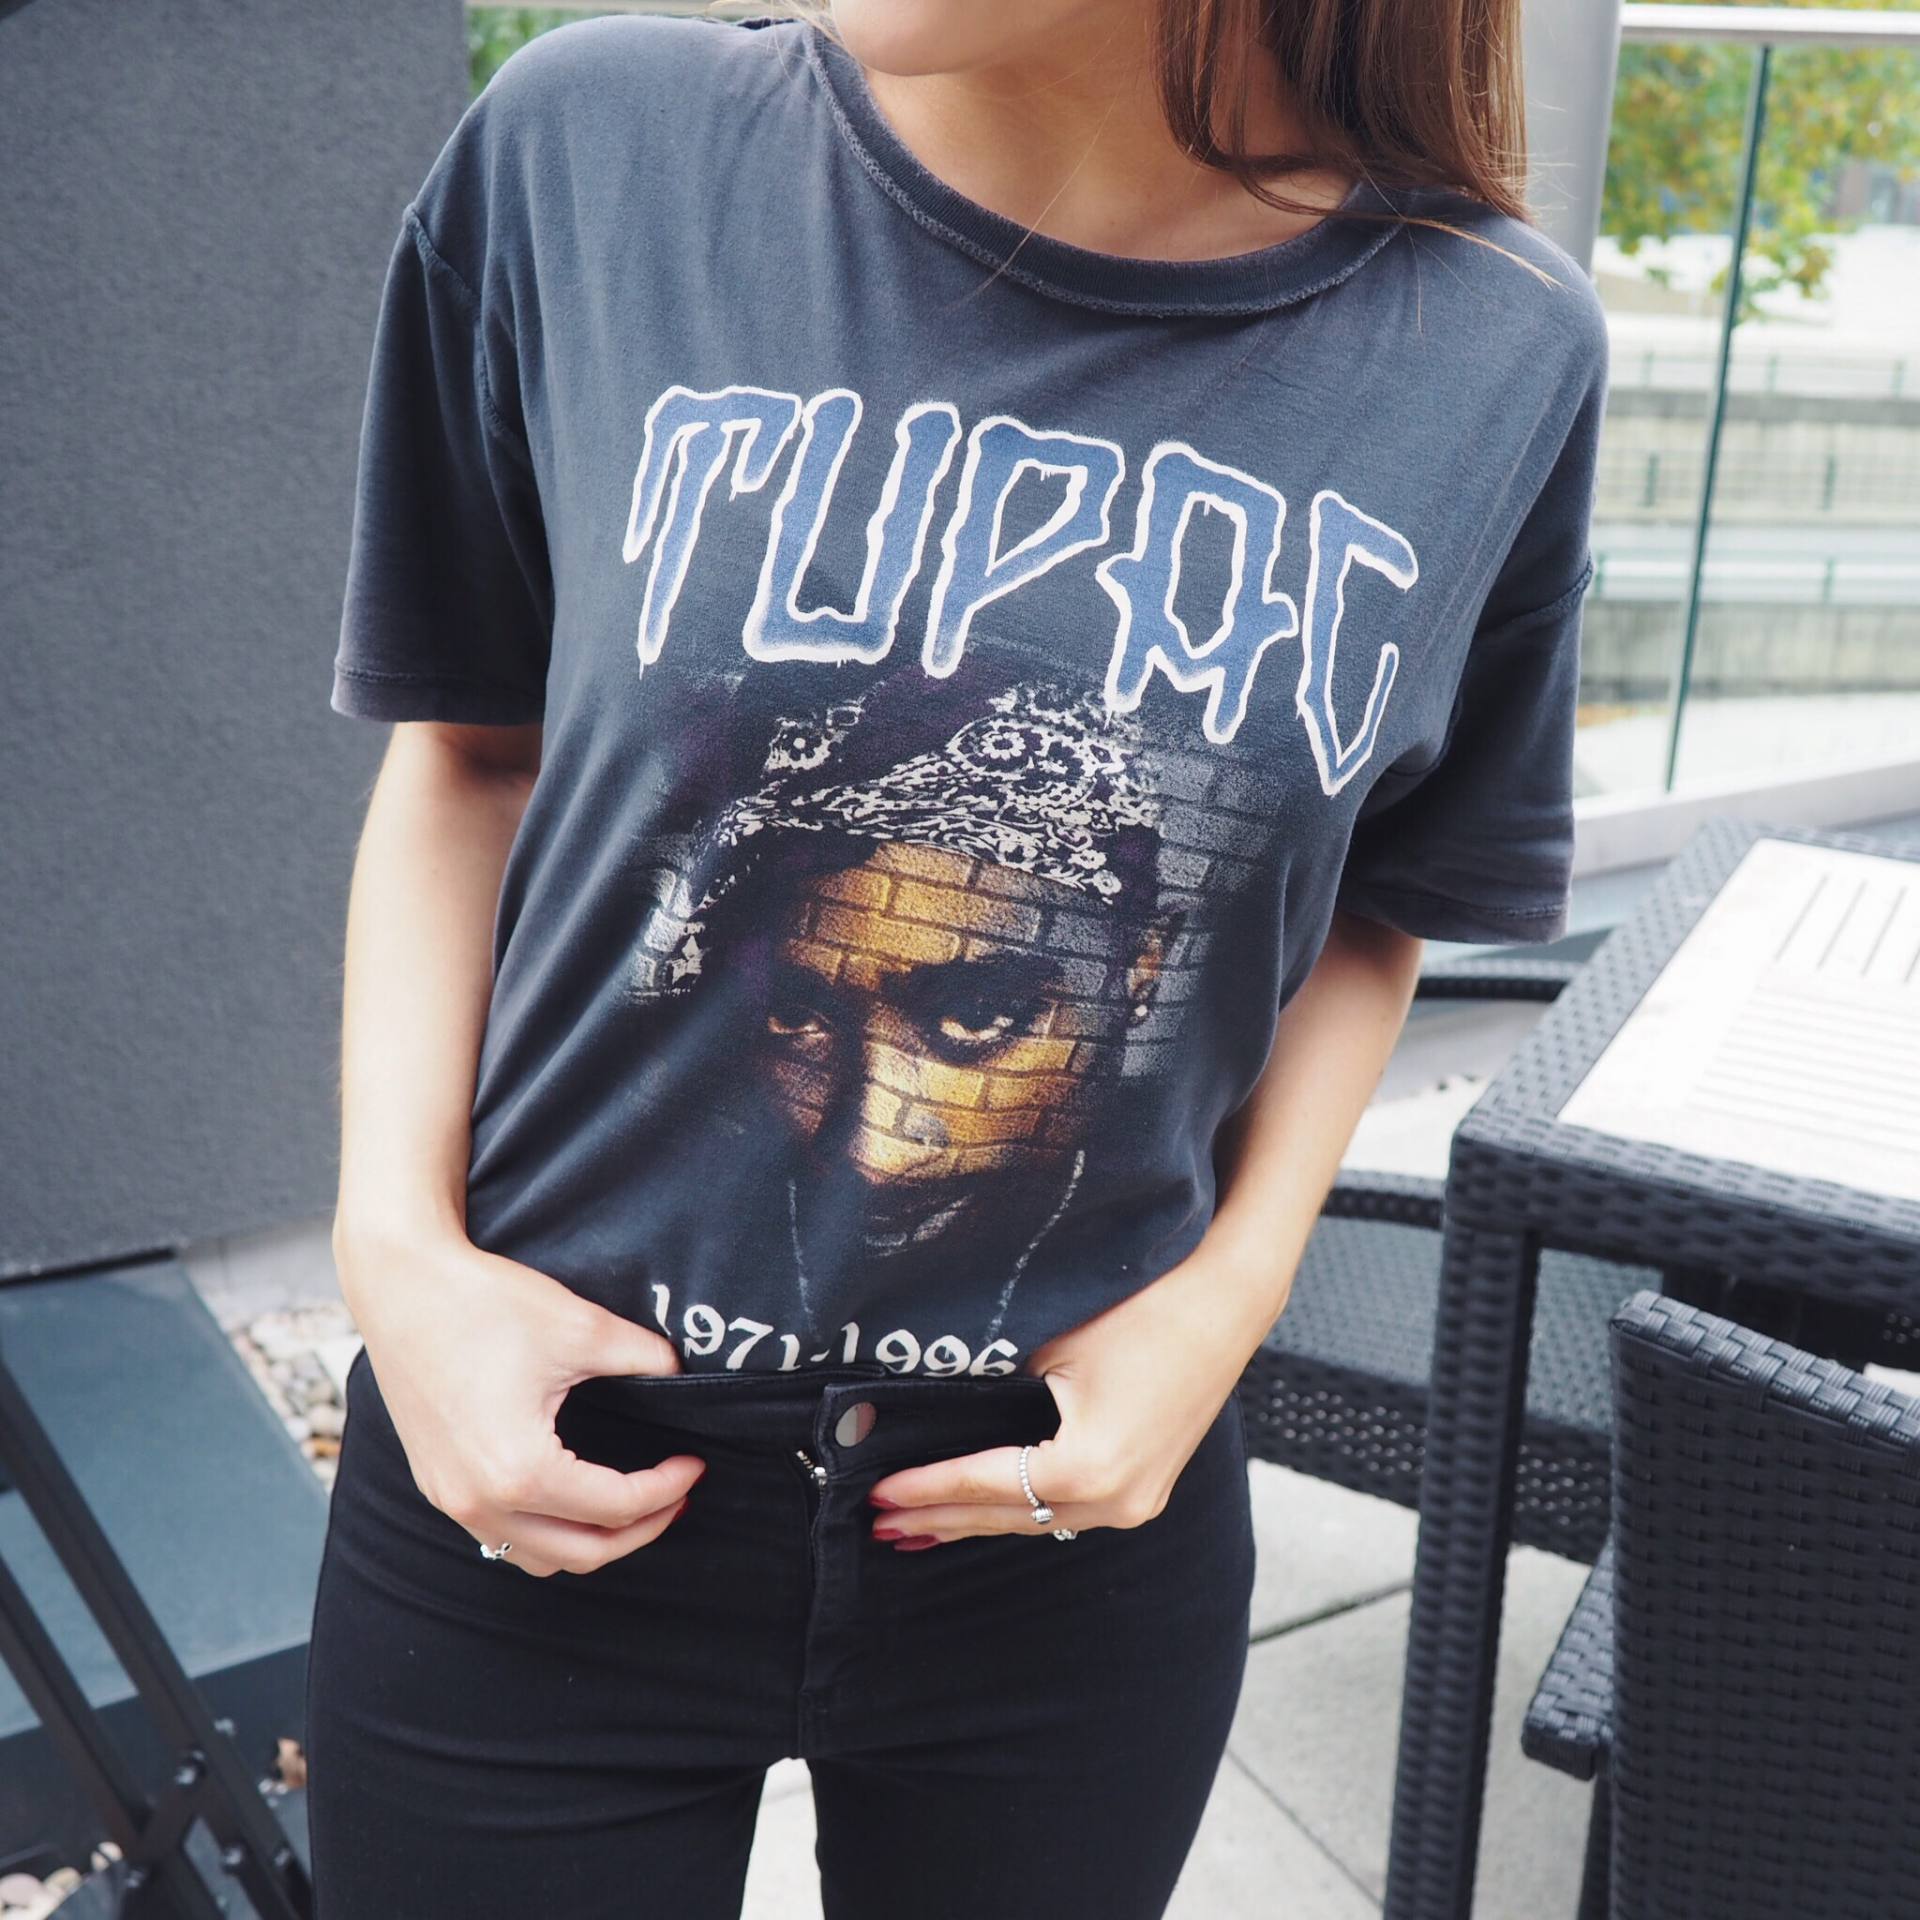 Fashion blogger wearing music t-shirts